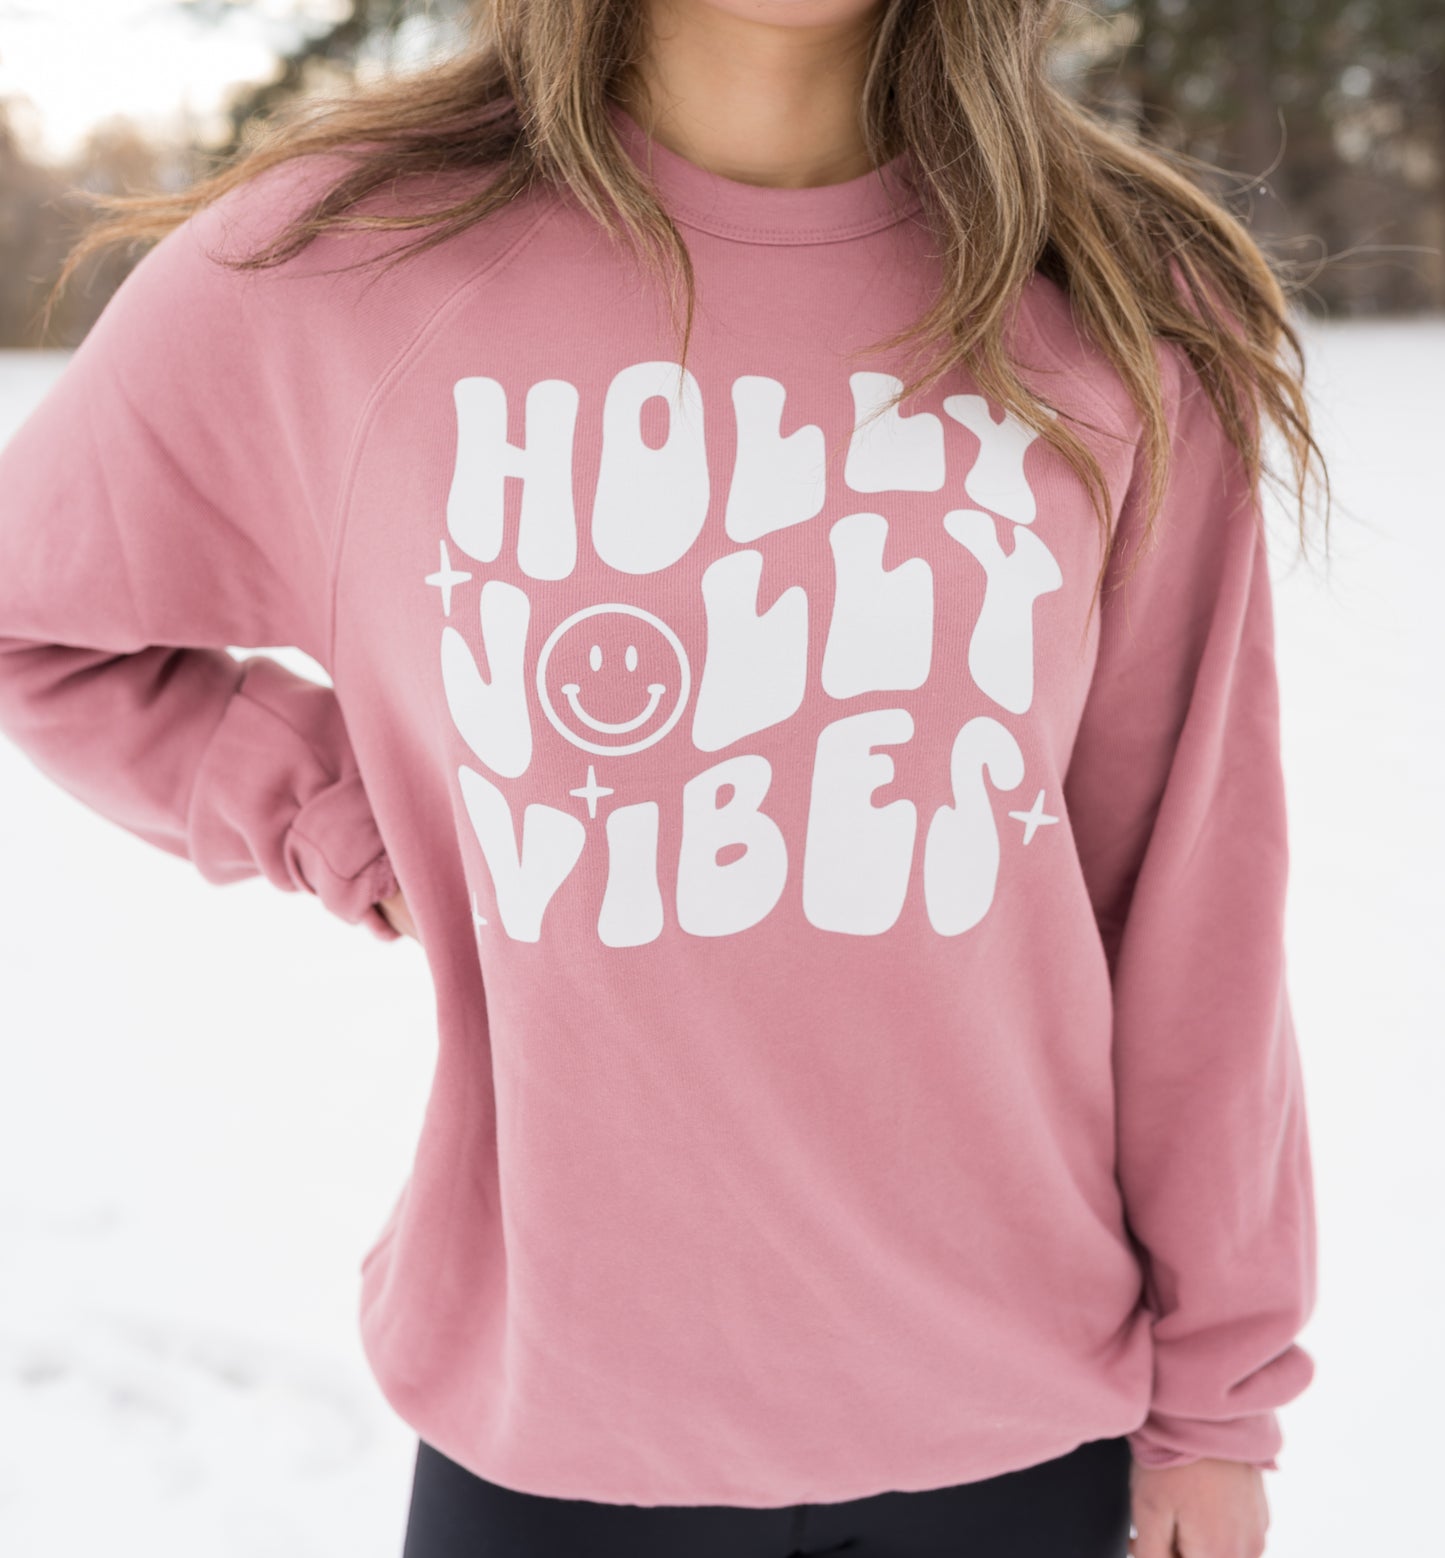 Holly jolly vibes sweatshirt